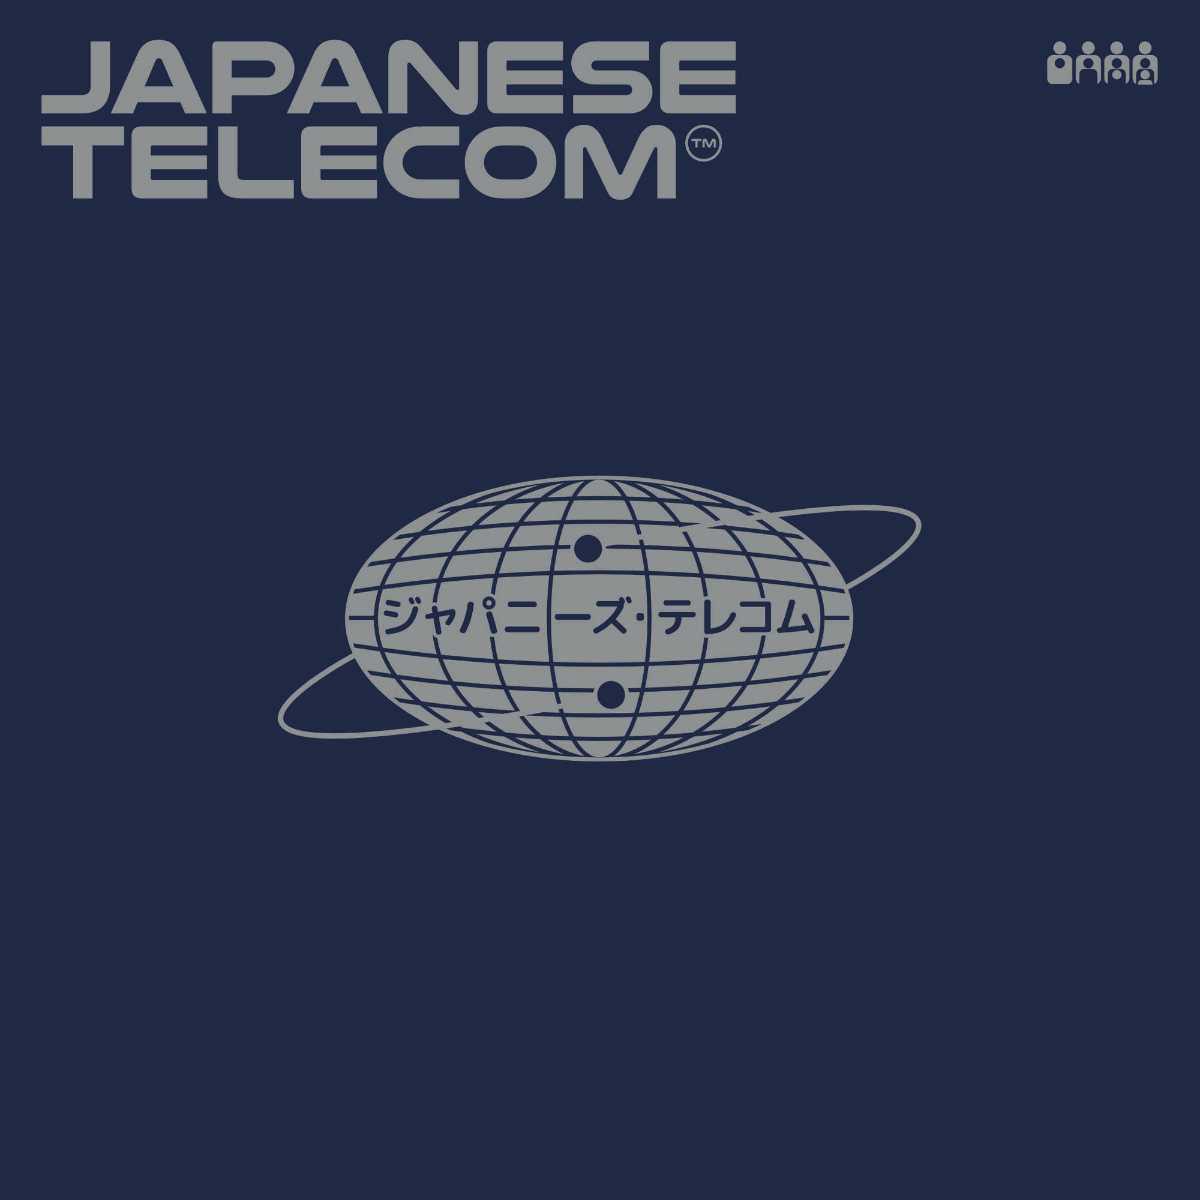 Japanese Telecom 'Japanese Telecom EP' 12" [Import]